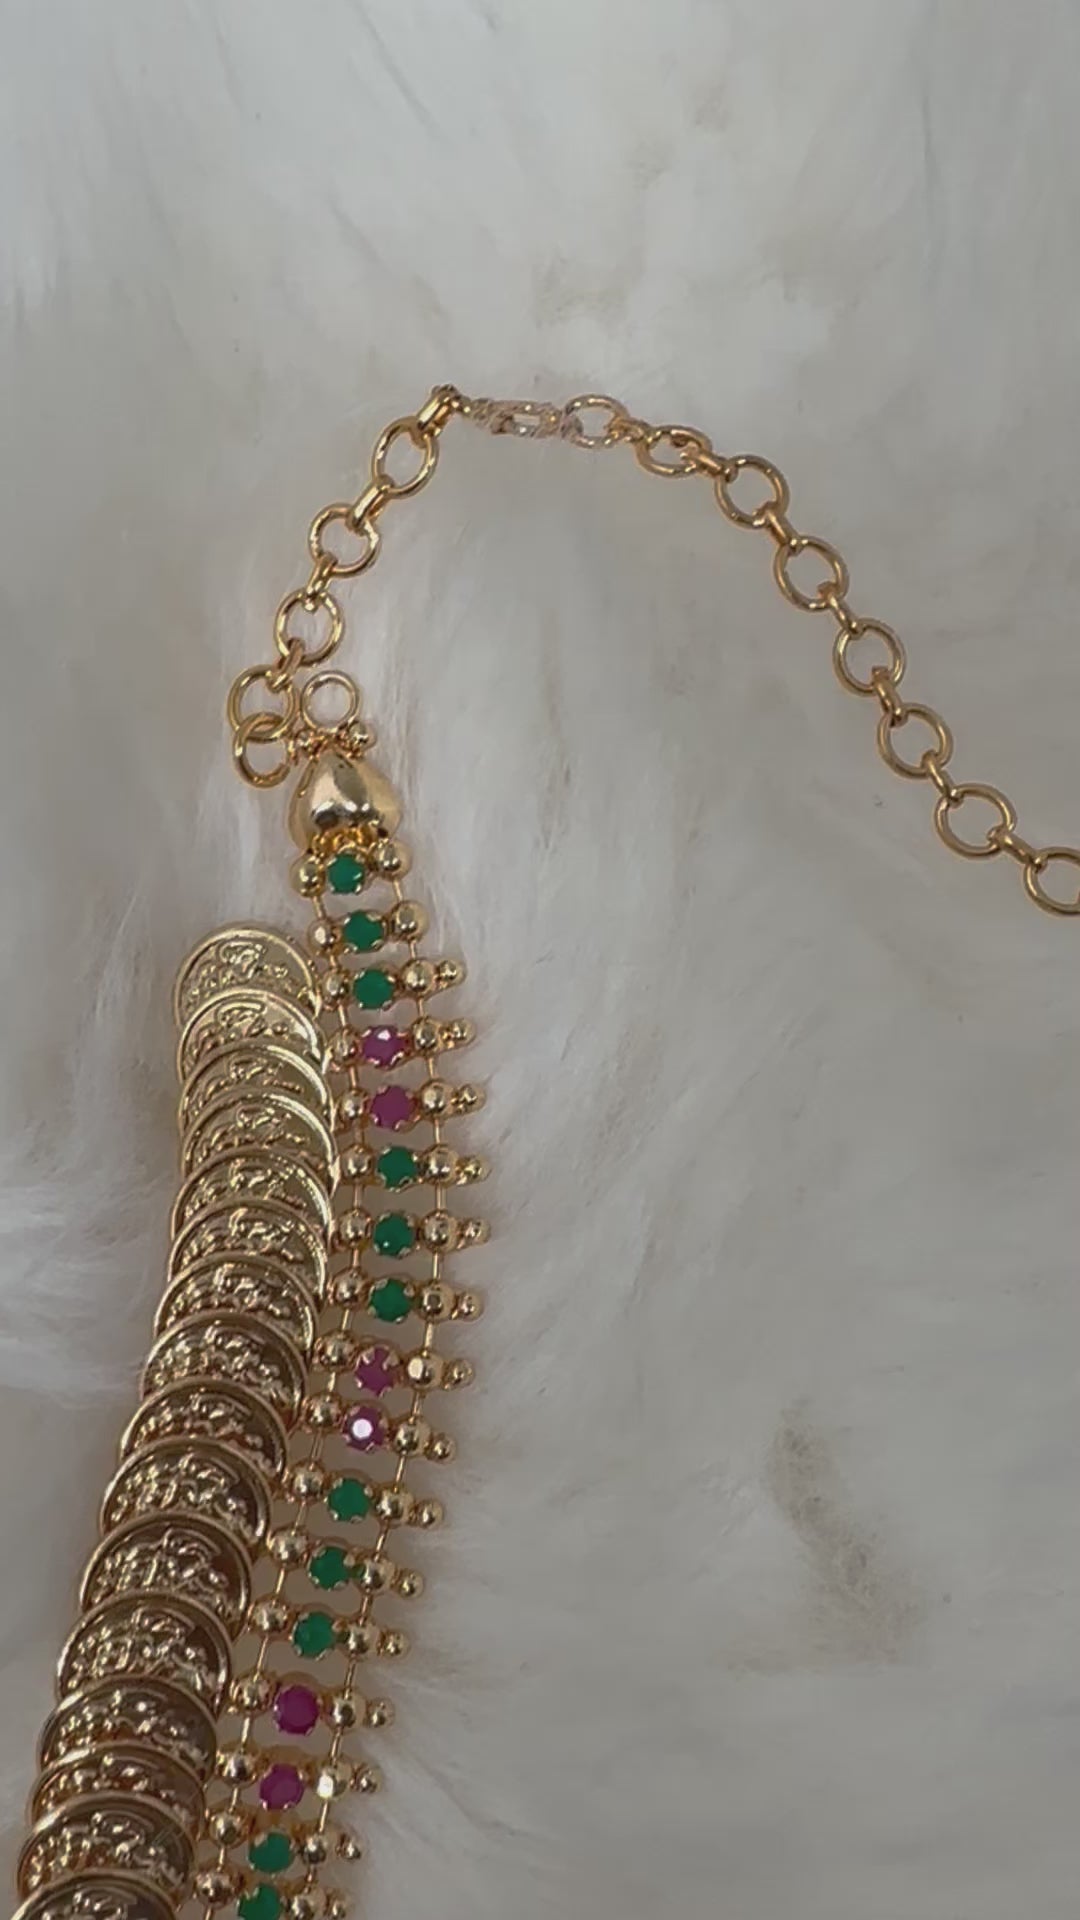 Buy JACKIE 18K Gold Money Bag Necklace Pot of Gold Pendant Online in India  